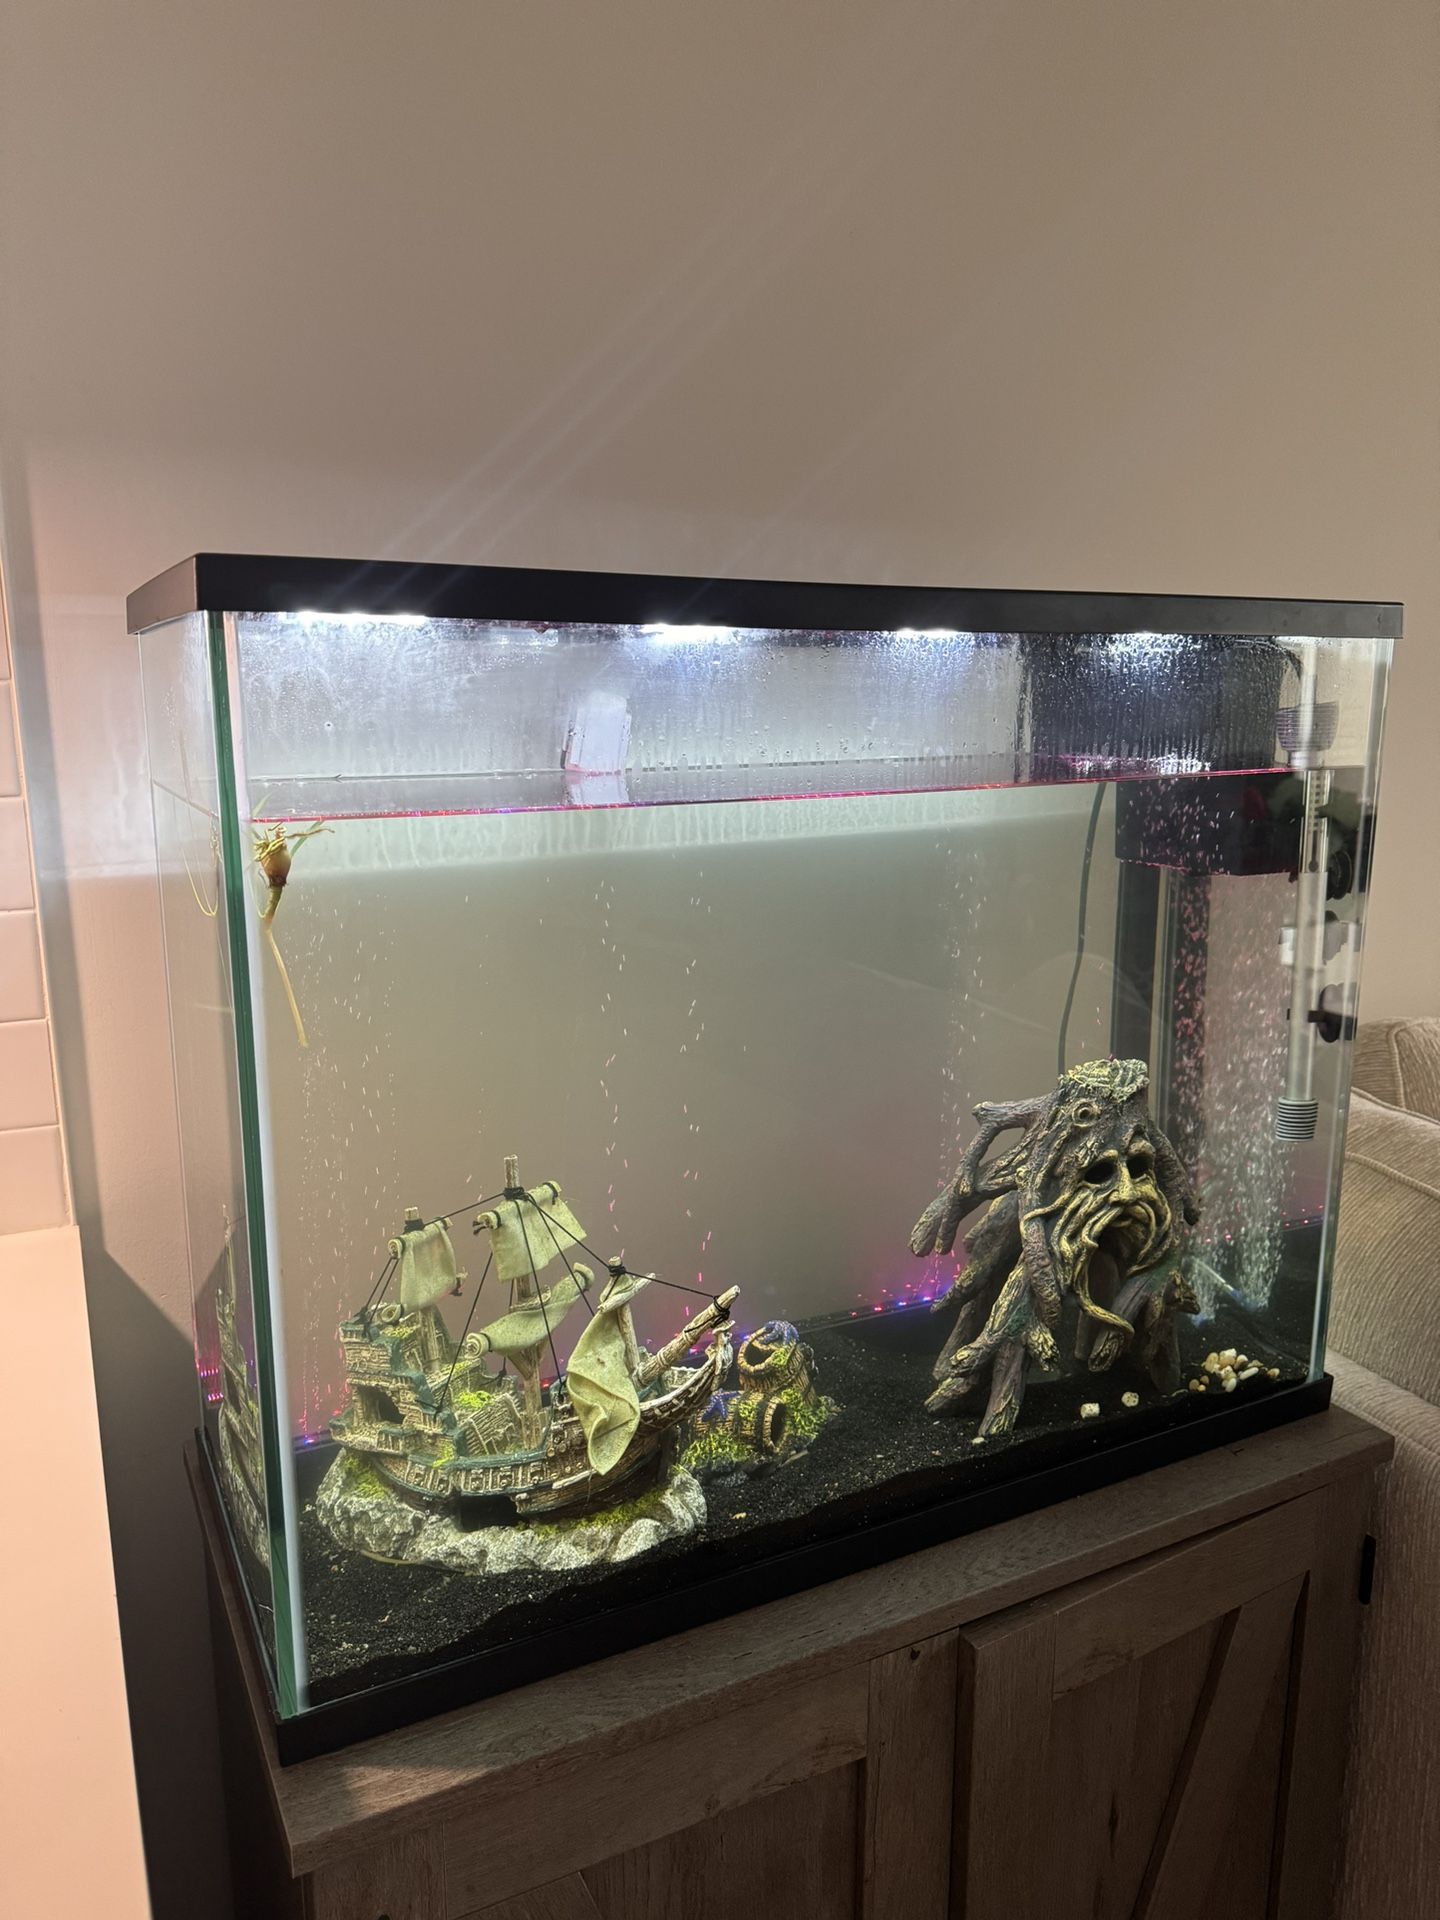 Fish Tank Complete Starter Set Up